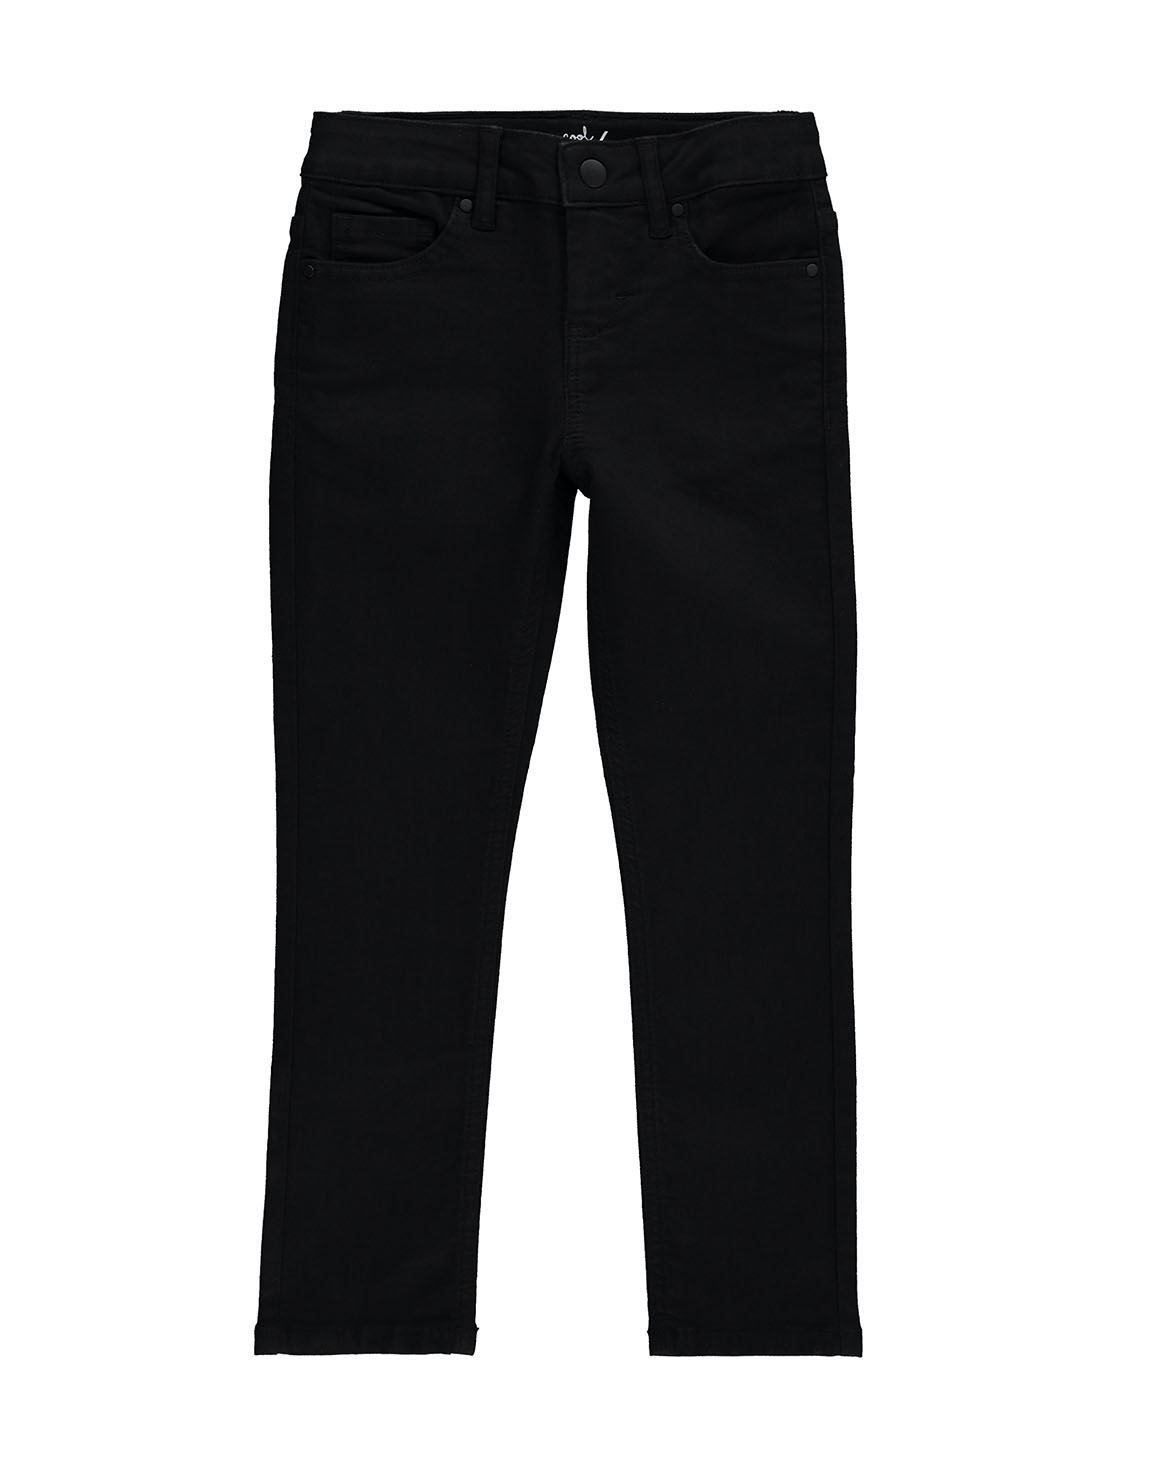 Adjustable Stretch Denim Jeans | Woolworths.co.za